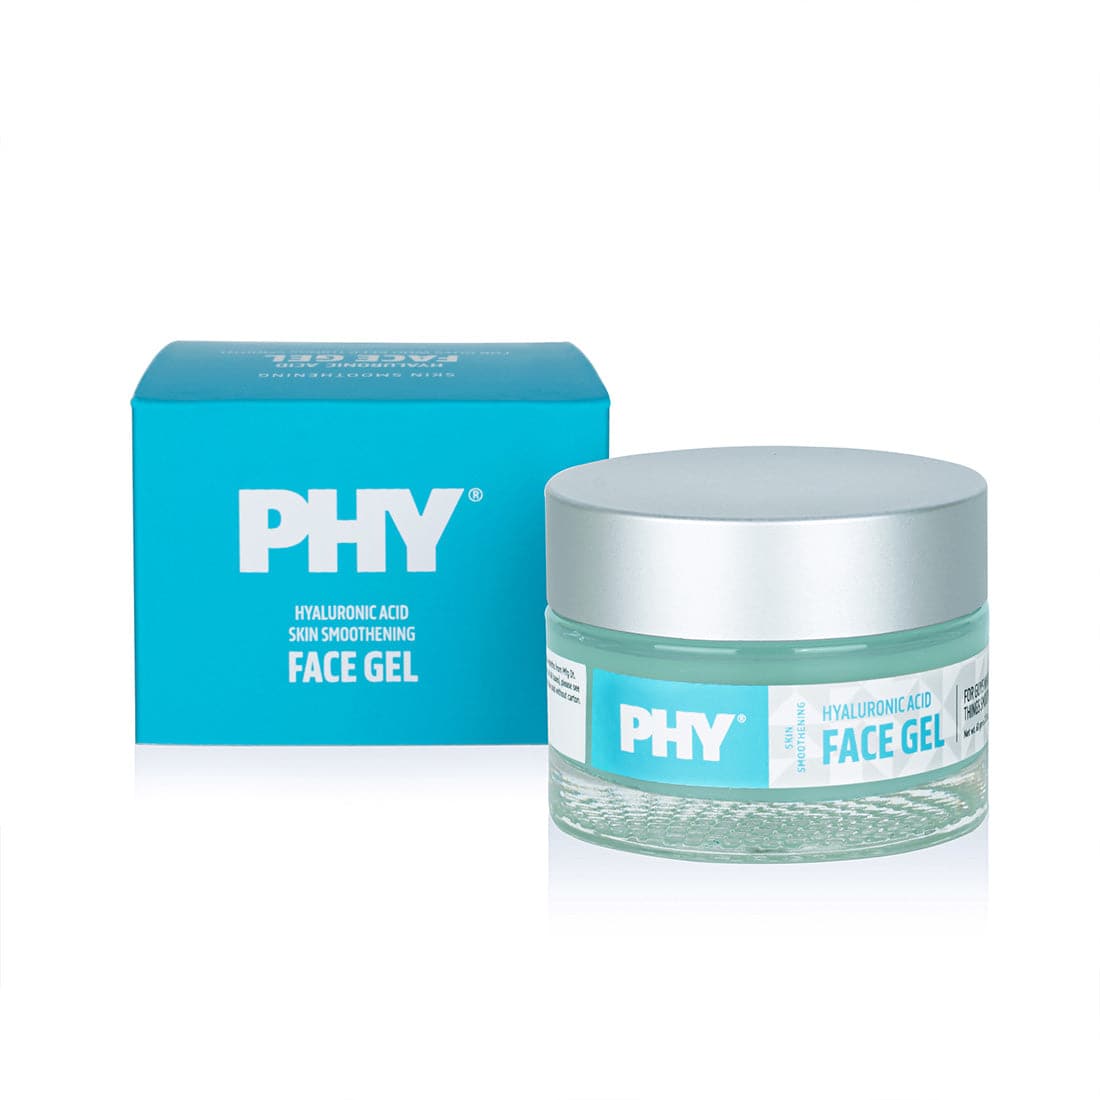 Phy Skin Smoothening Face Gel | Hyaluronic Acid